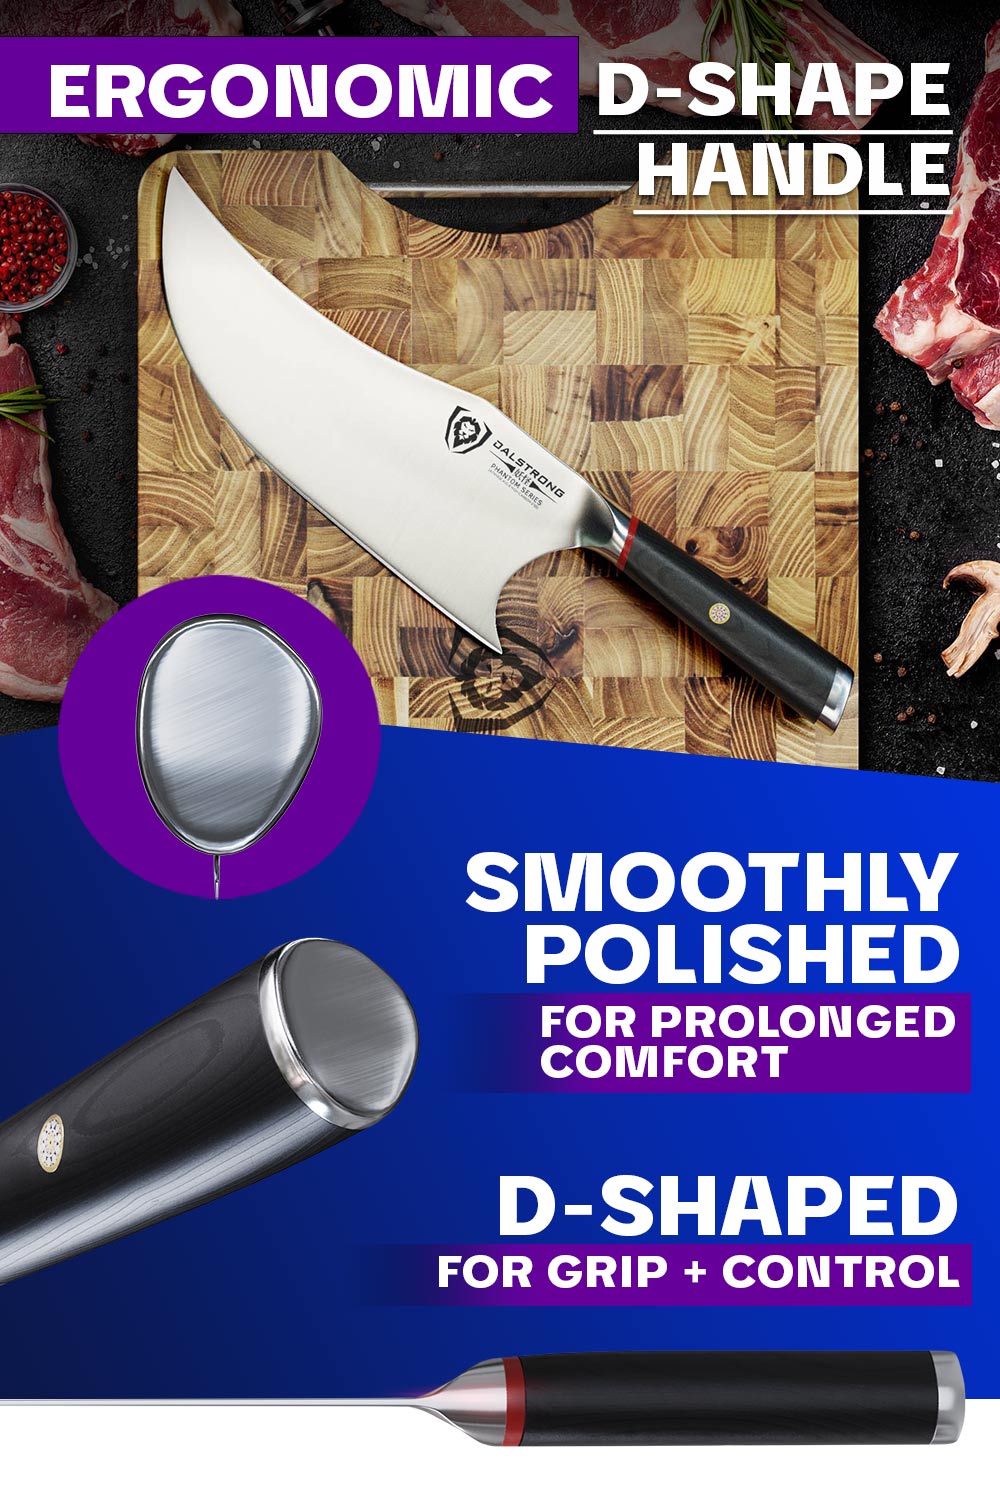 Dalstrong phantom series 9 inch cleaver knife featuring it's ergonomic d-shape pakka wood handle.